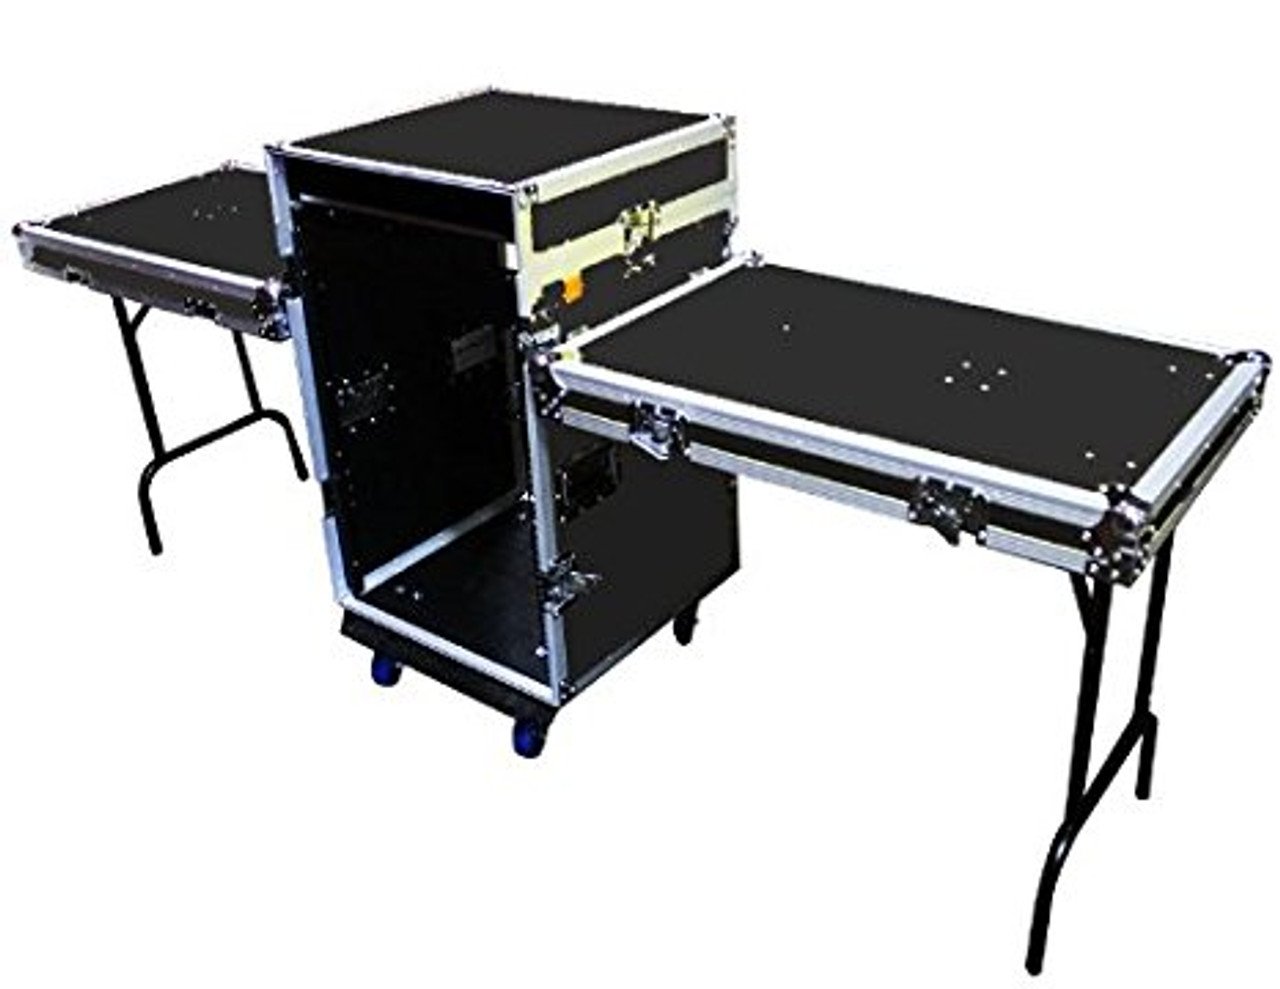 MR DJ CASE7000 ATA 16 Space 10 Slanted Top 16U 10U Mixer Amp Dj CD Combo Rack Flight Case With Laptop Shelf & Two Side Built-In Folding Table